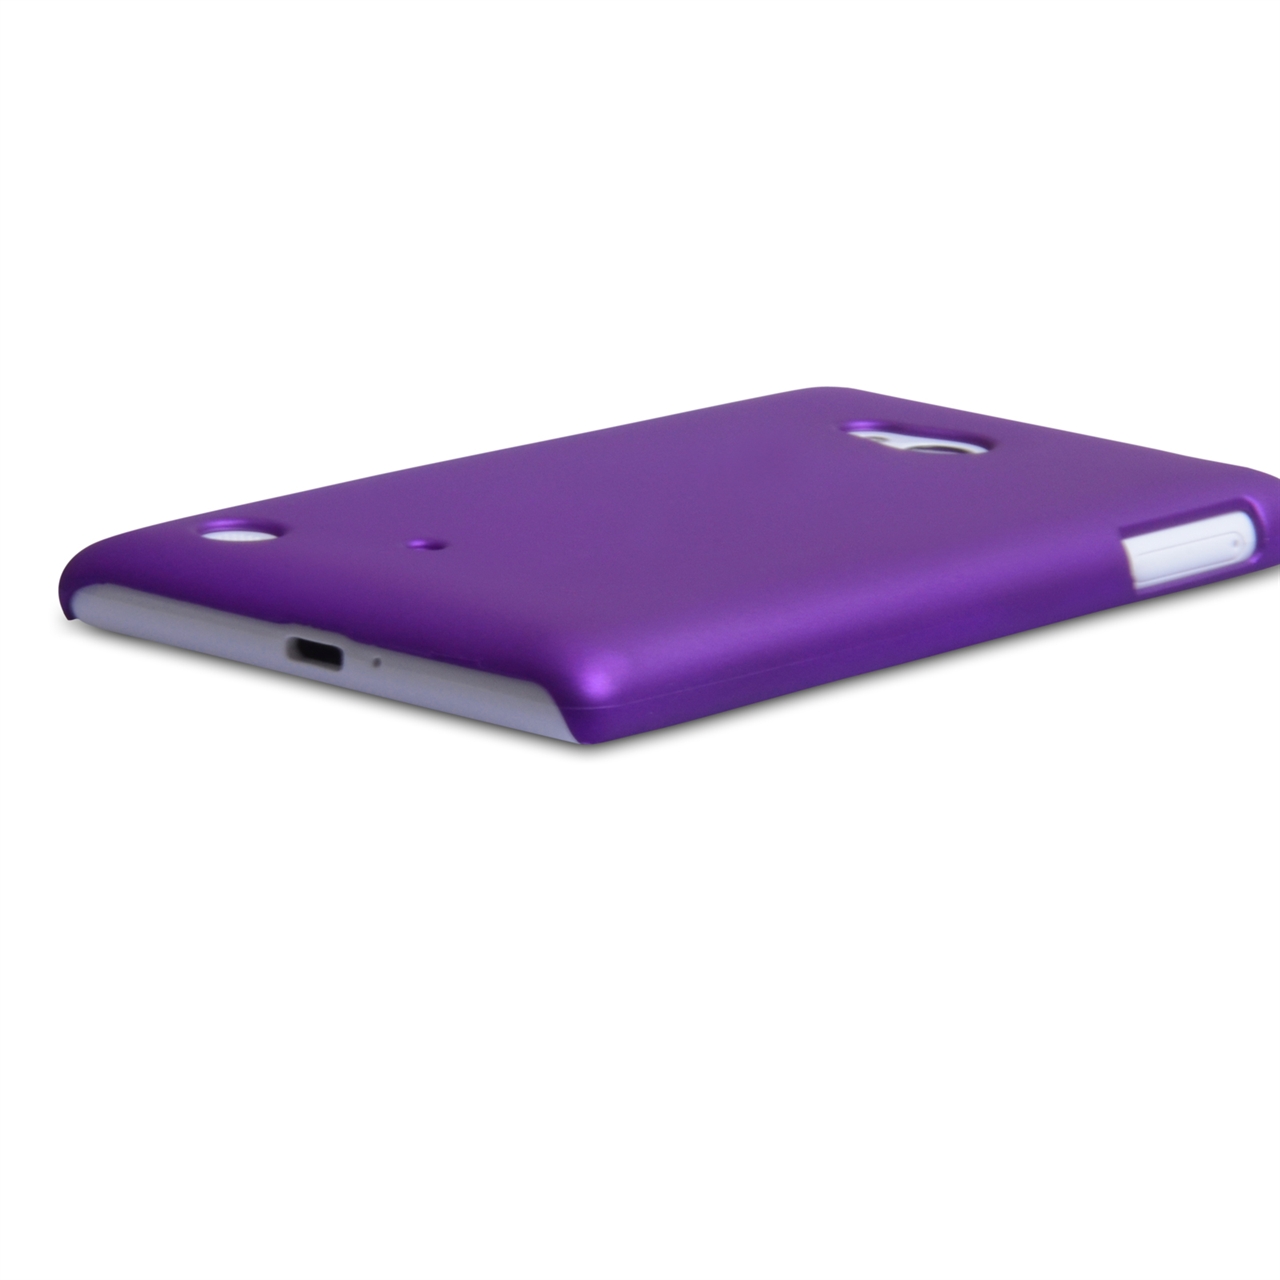 YouSave Accessories Nokia Lumia 720 Hard Hybrid Case - Purple